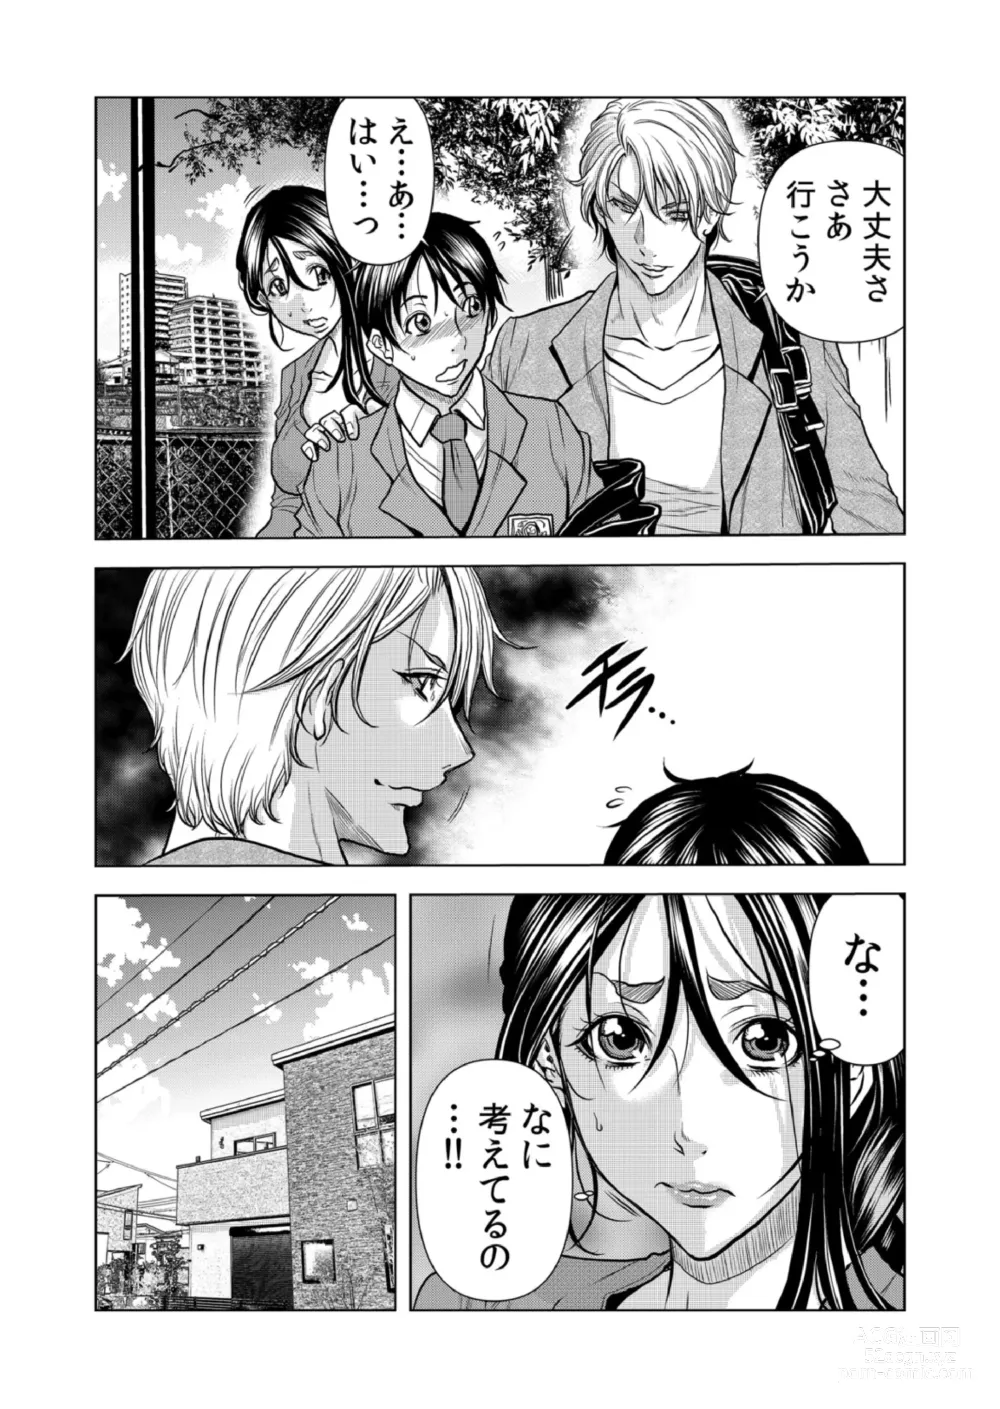 Page 4 of manga Mamasan,yobai ha OK desuka? VOL9